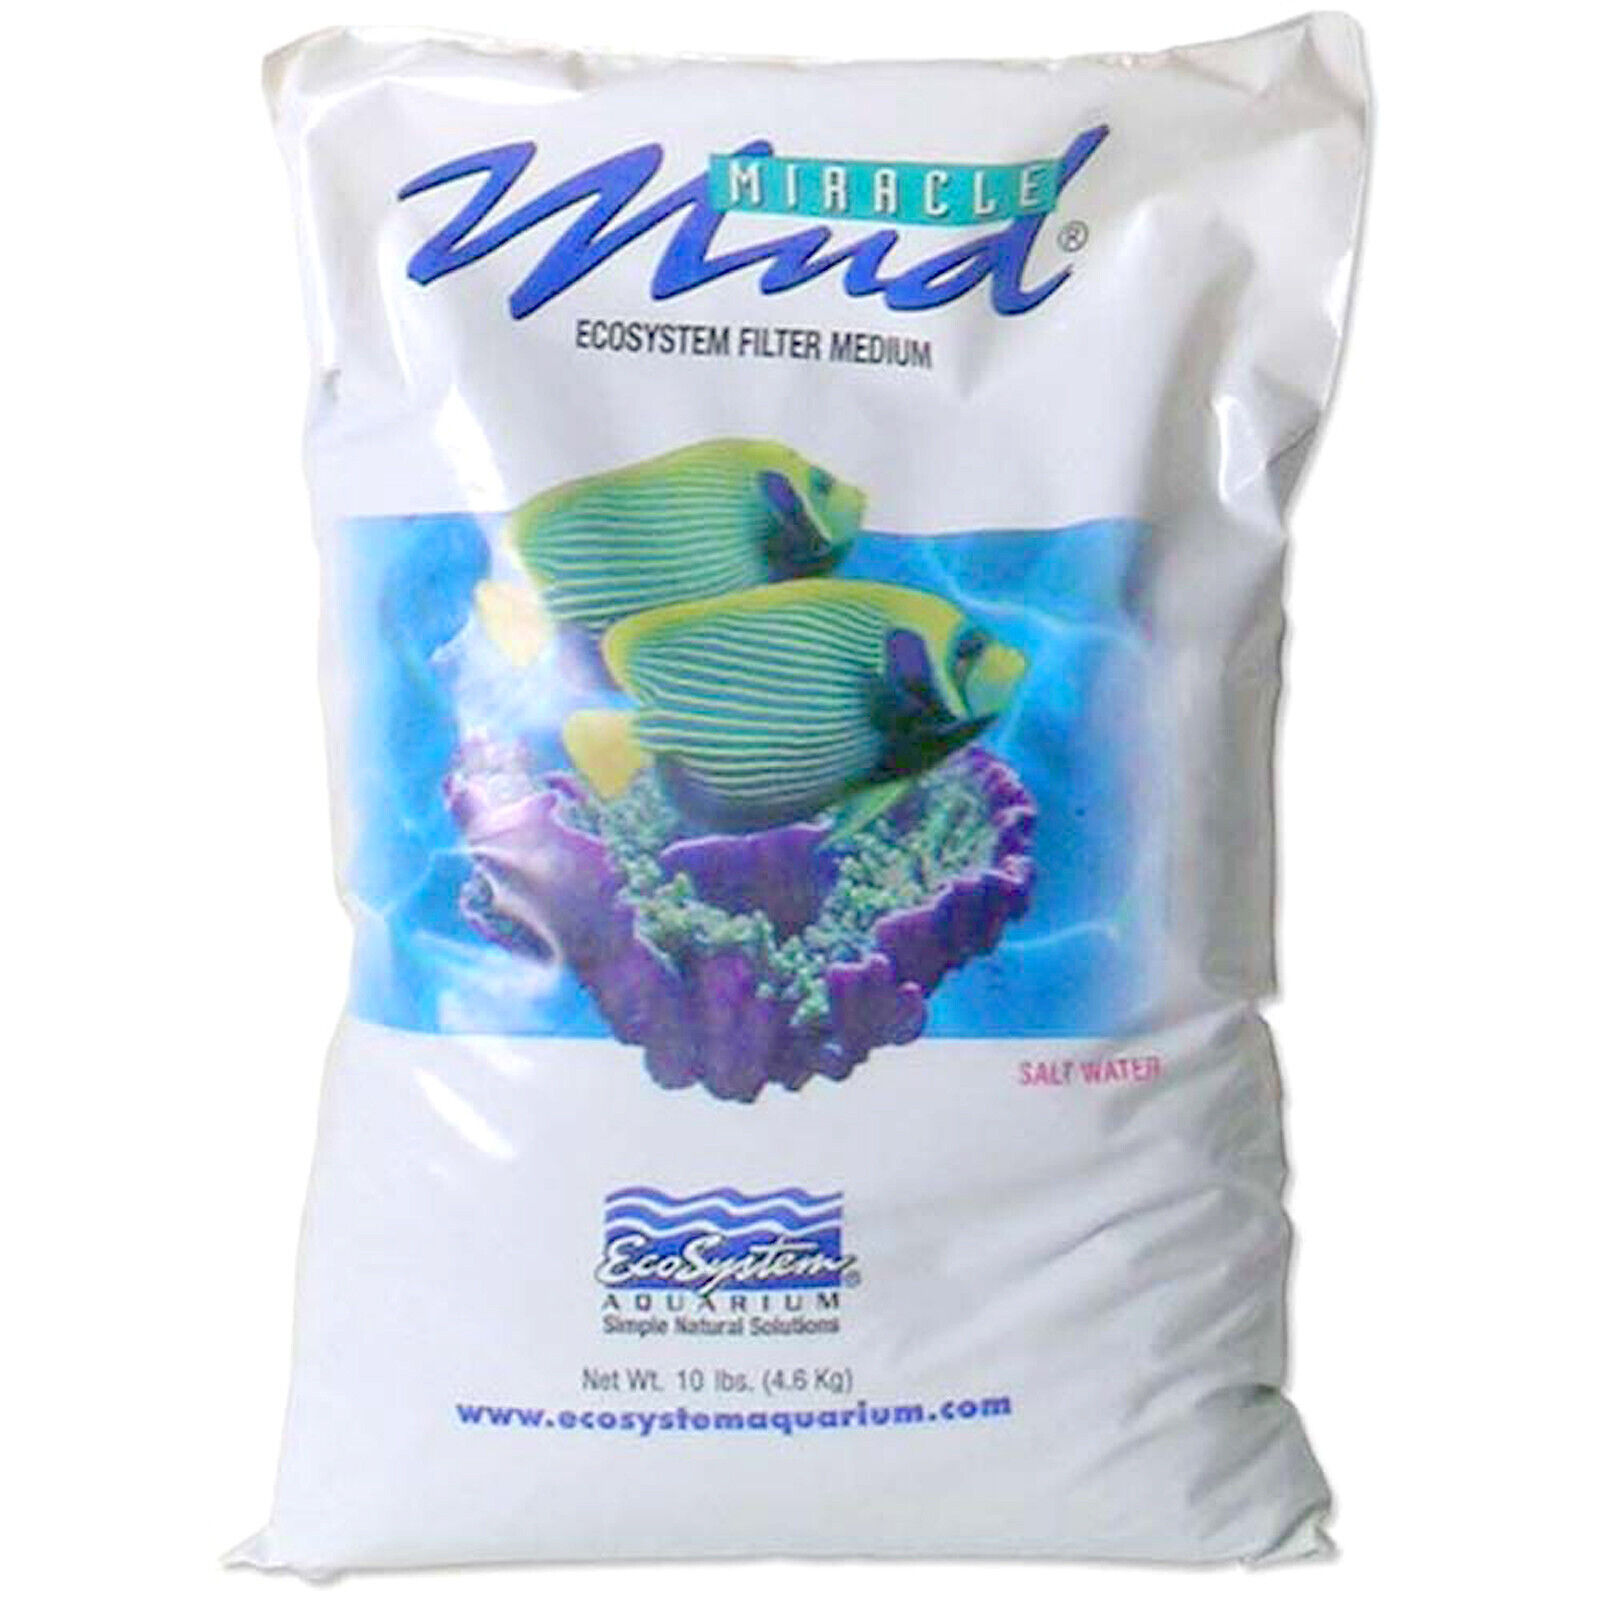 EcoSystem Miracle Mud 10 lb Bag Saltwater and Reef Aquarium Refugium Substrate